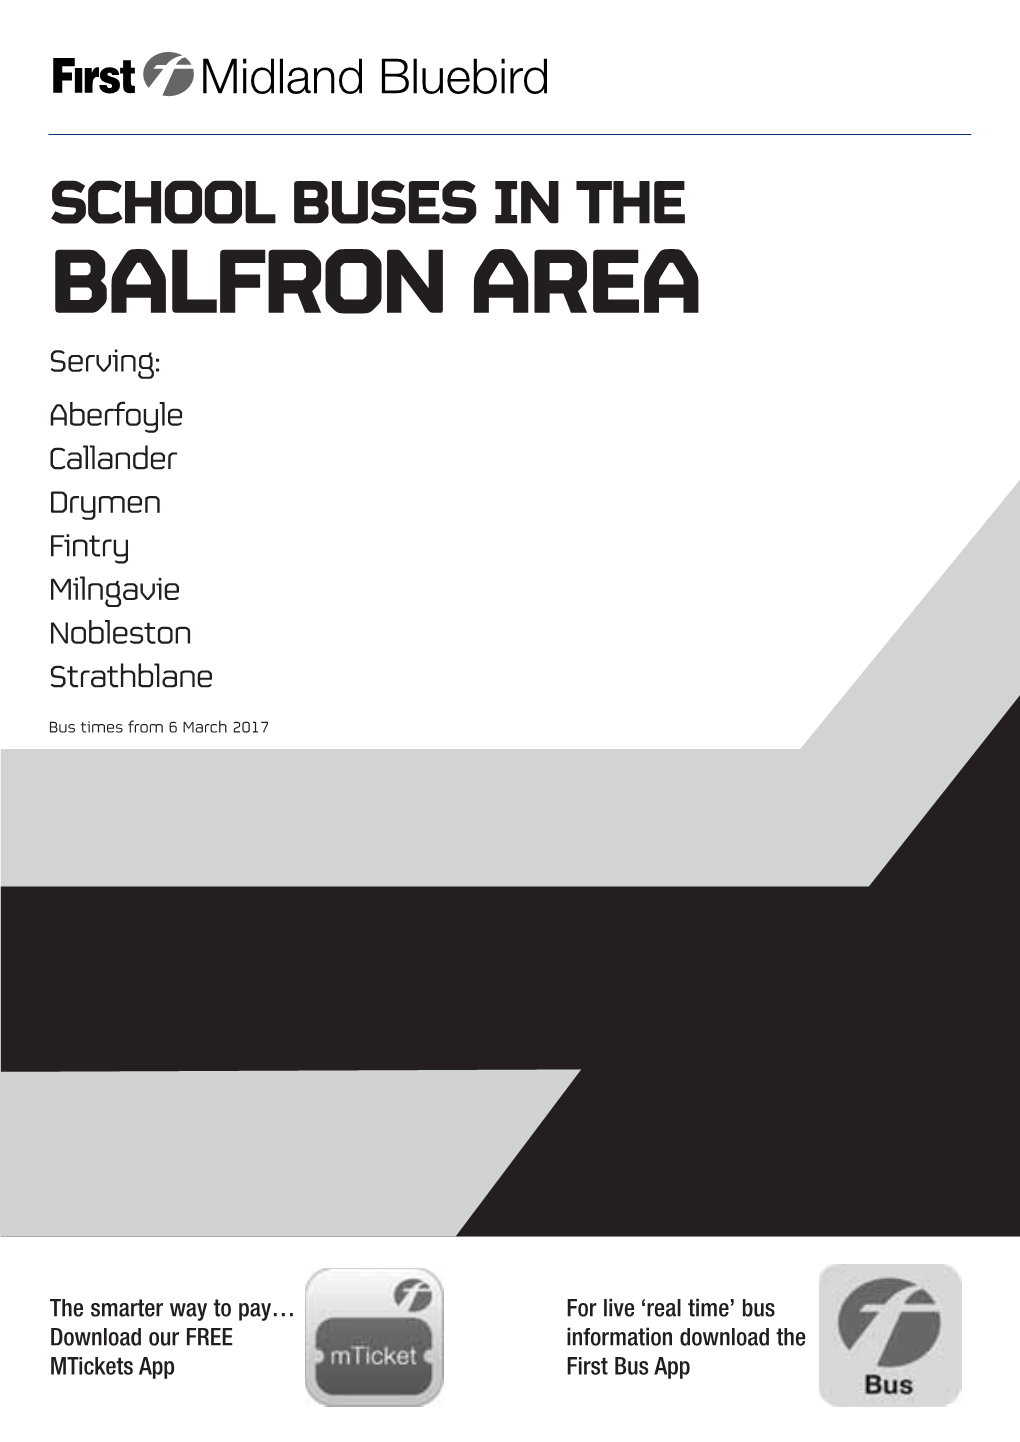 BALFRON AREA Serving: Aberfoyle Callander Drymen Fintry Milngavie Nobleston Strathblane